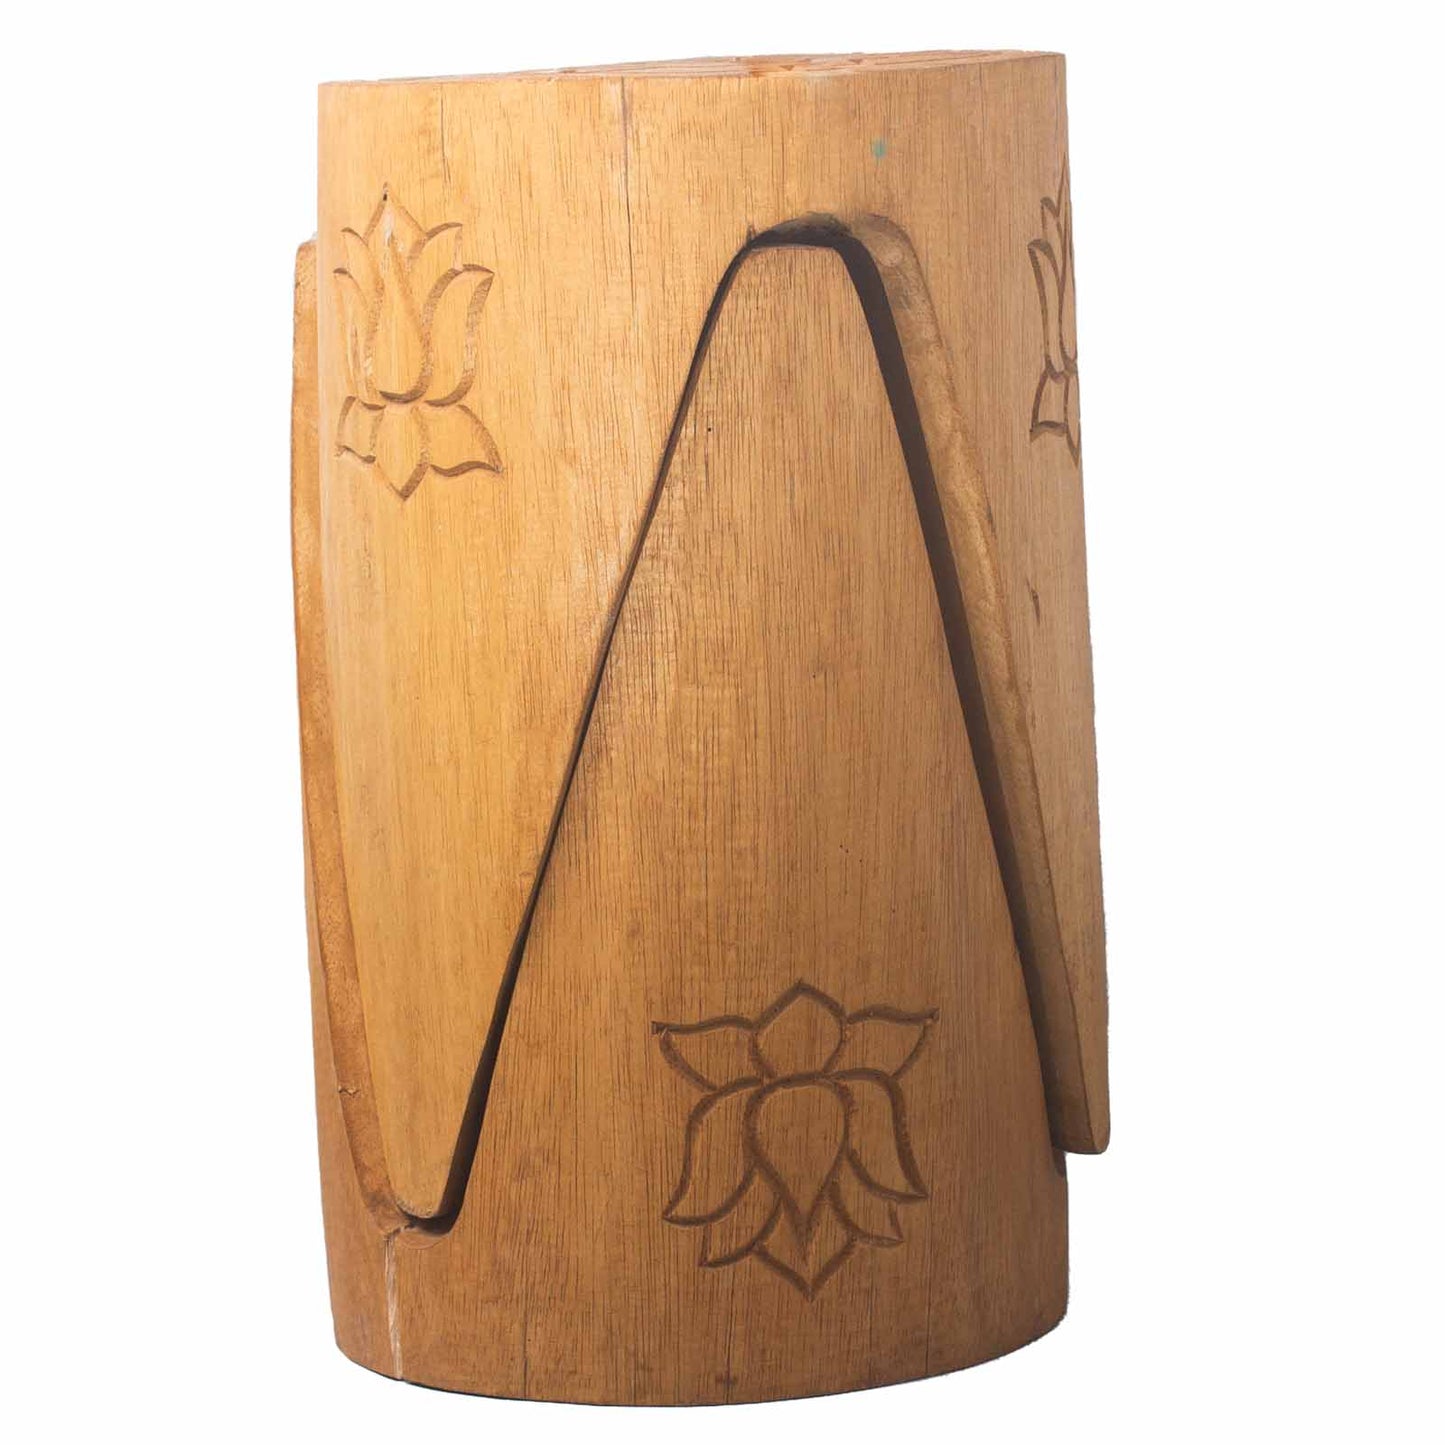 Interlocking Wooden Tribal Tables / Stools - Large